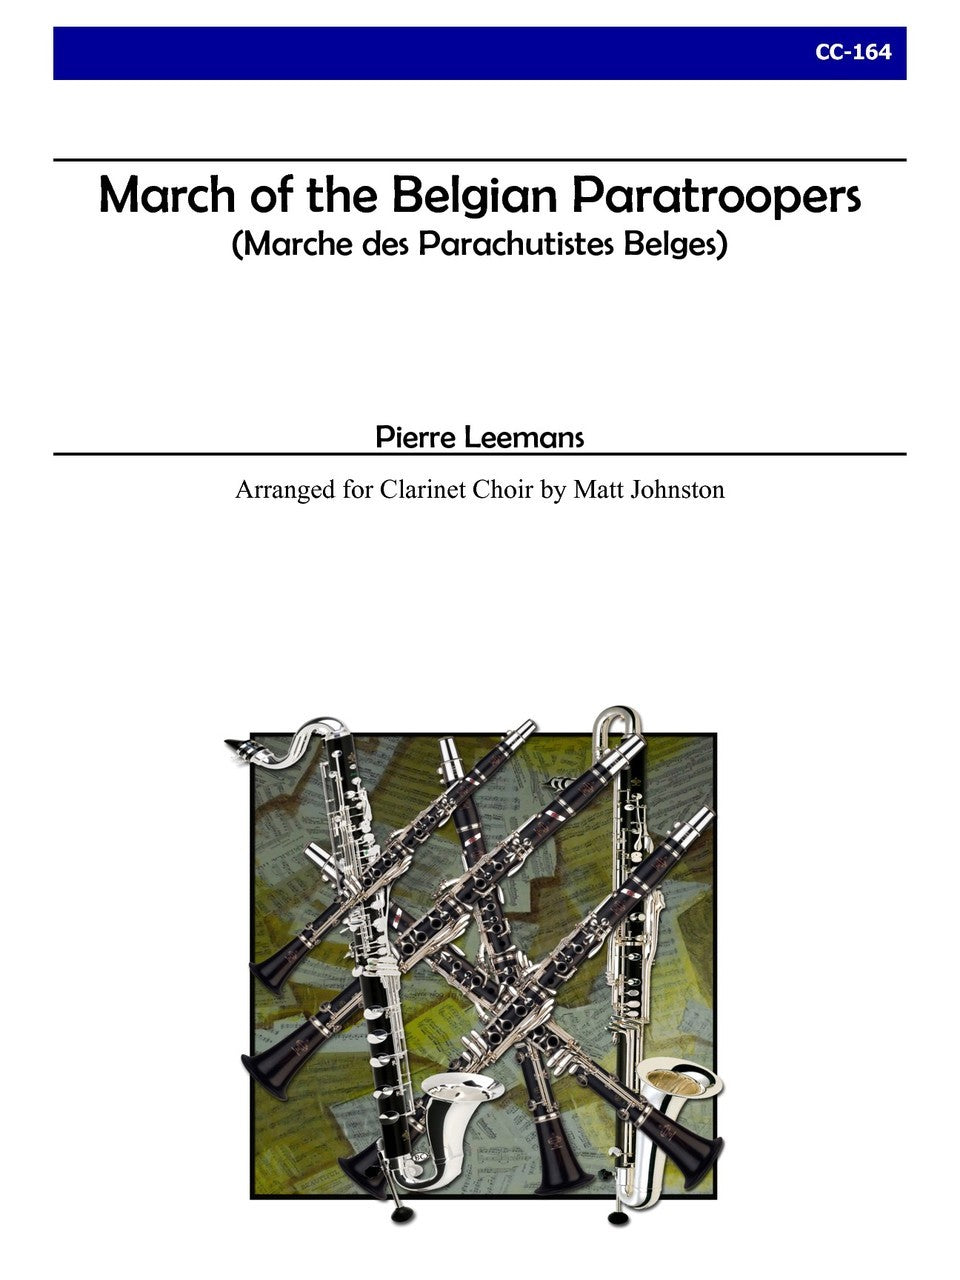 Leemans (arr. Matt Johnston) - March of the Belgian Paratroopers for Clarinet Choir